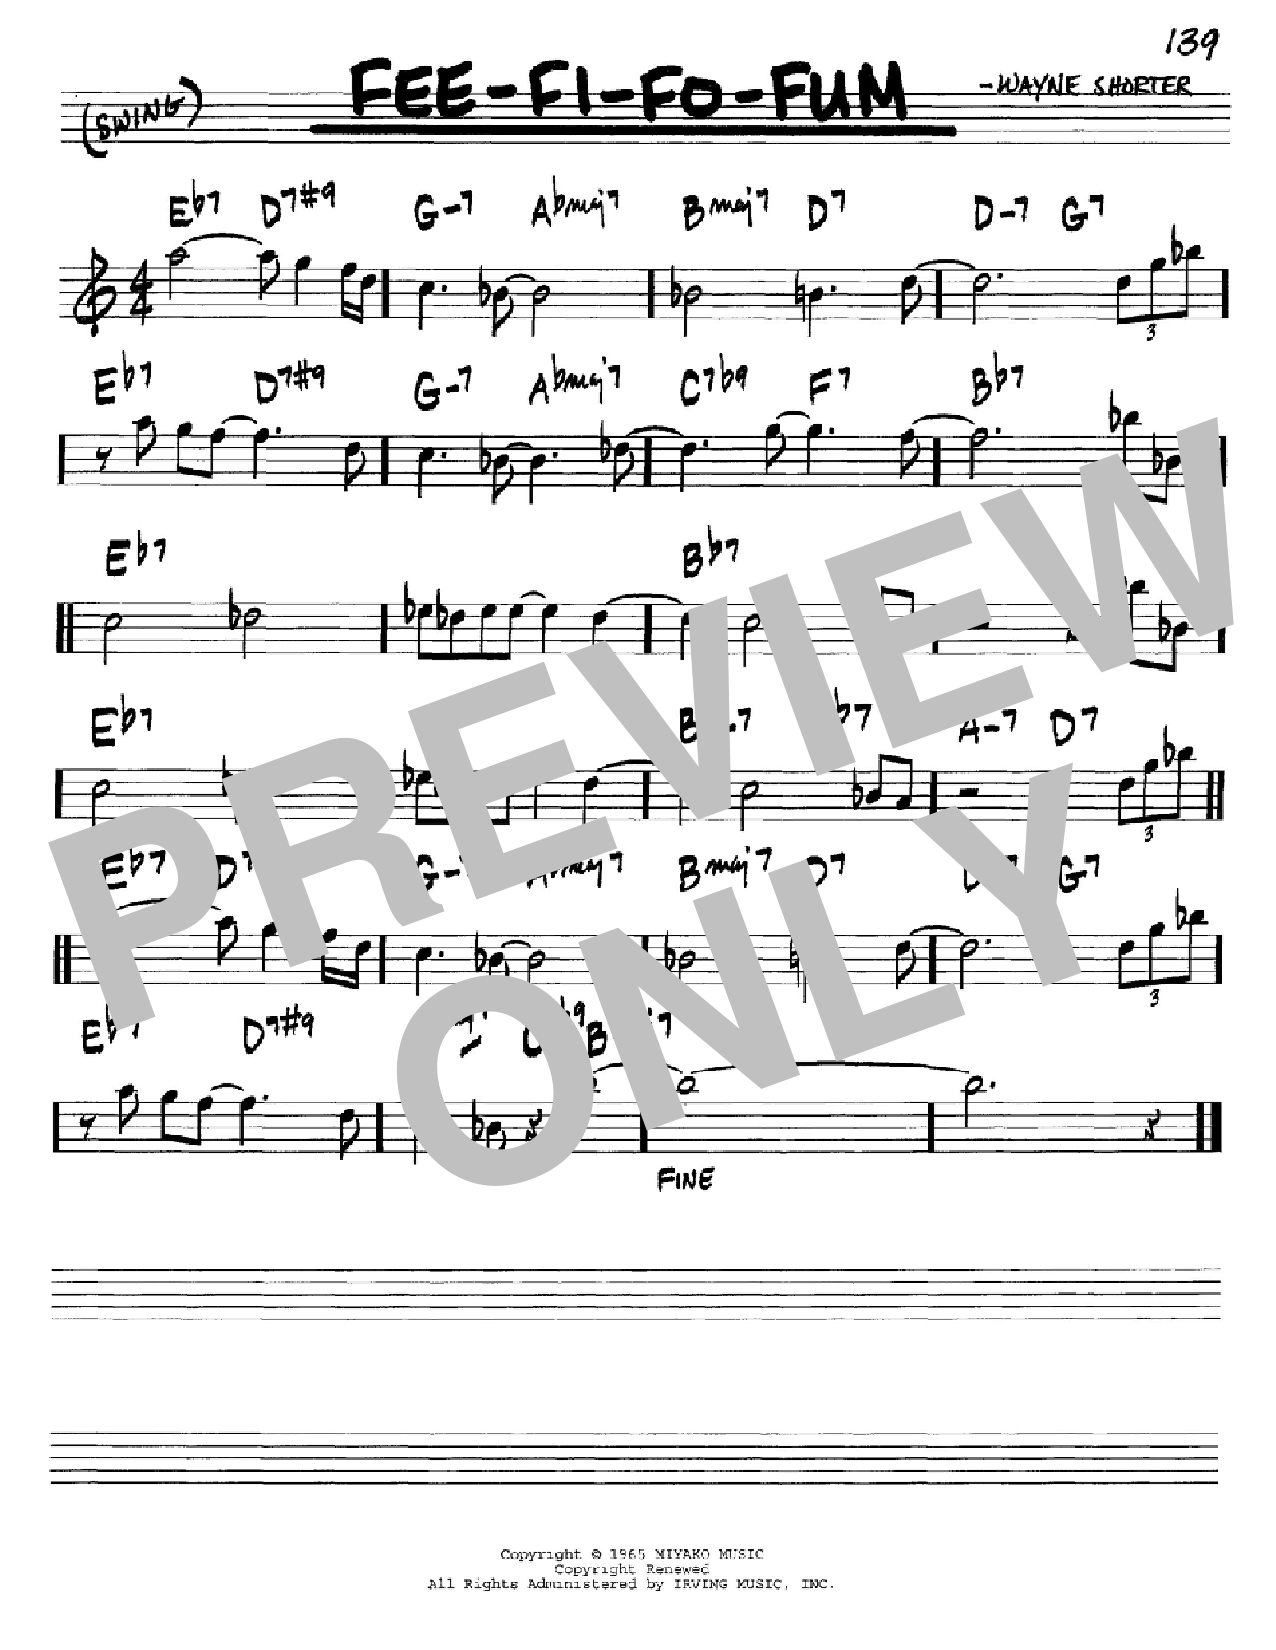 Wayne Shorter Fee-Fi-Fo-Fum Sheet Music Notes & Chords for Real Book - Melody & Chords - Bb Instruments - Download or Print PDF